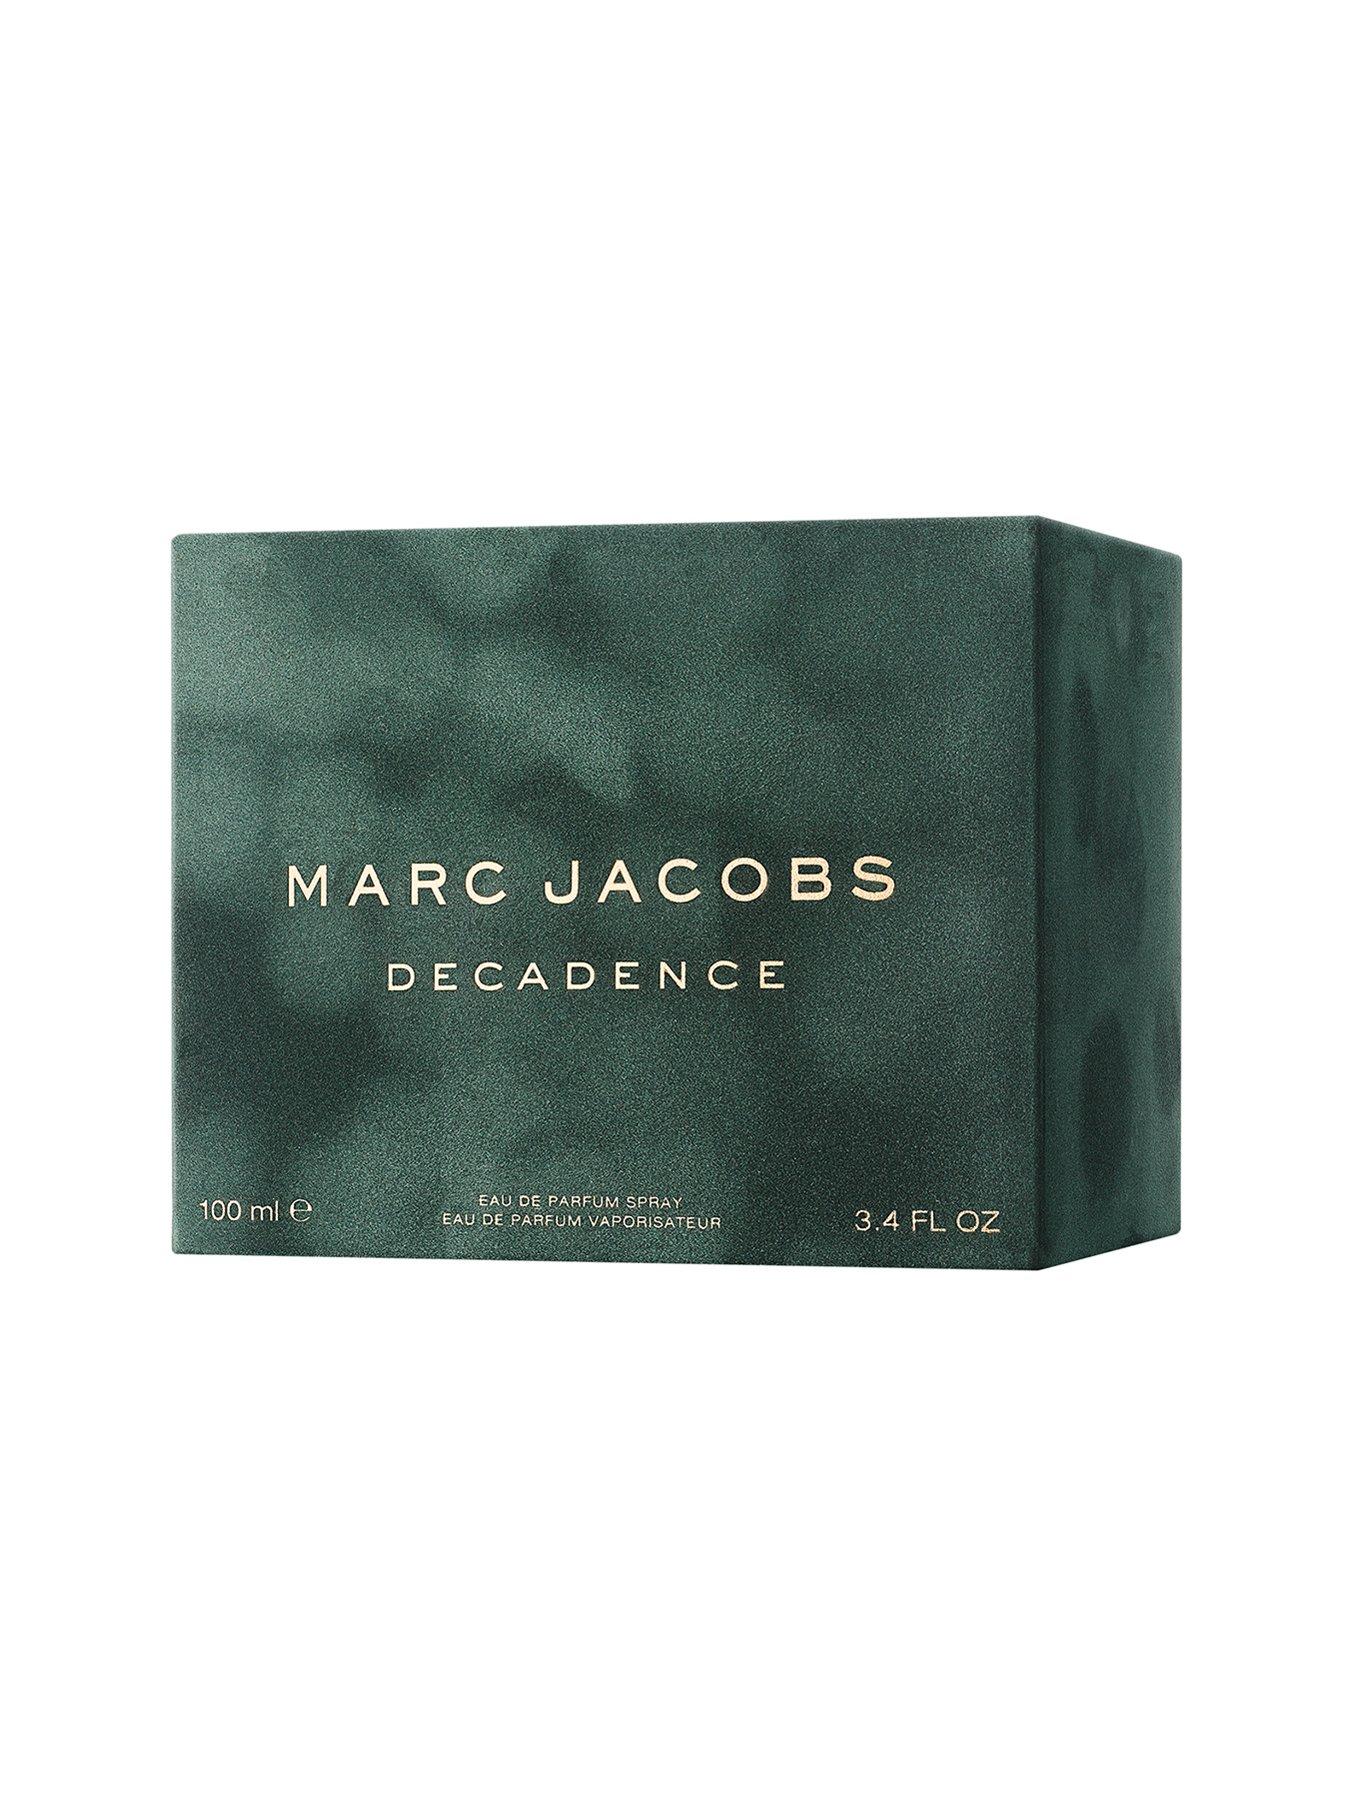 MARC JACOBS Decadence Eau de Parfum - 100ml | Very.co.uk